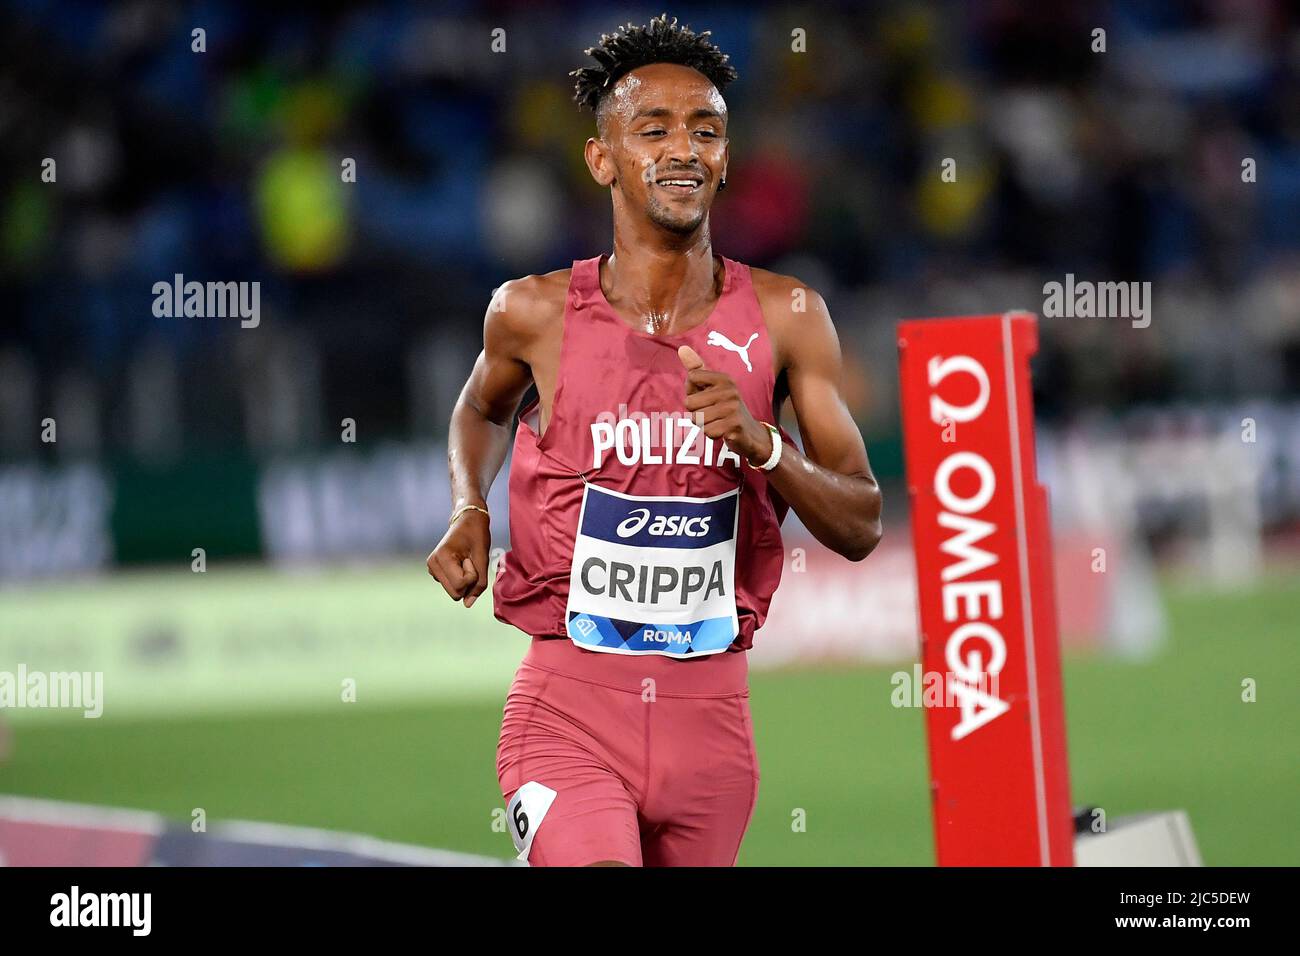 Yemaneberhan Crippa aus Italien tritt am 5000m während der Goldenen Gala der IAAF Diamond League im Olympiastadion in Rom (Italien) am 9.. Juni 20 an Stockfoto